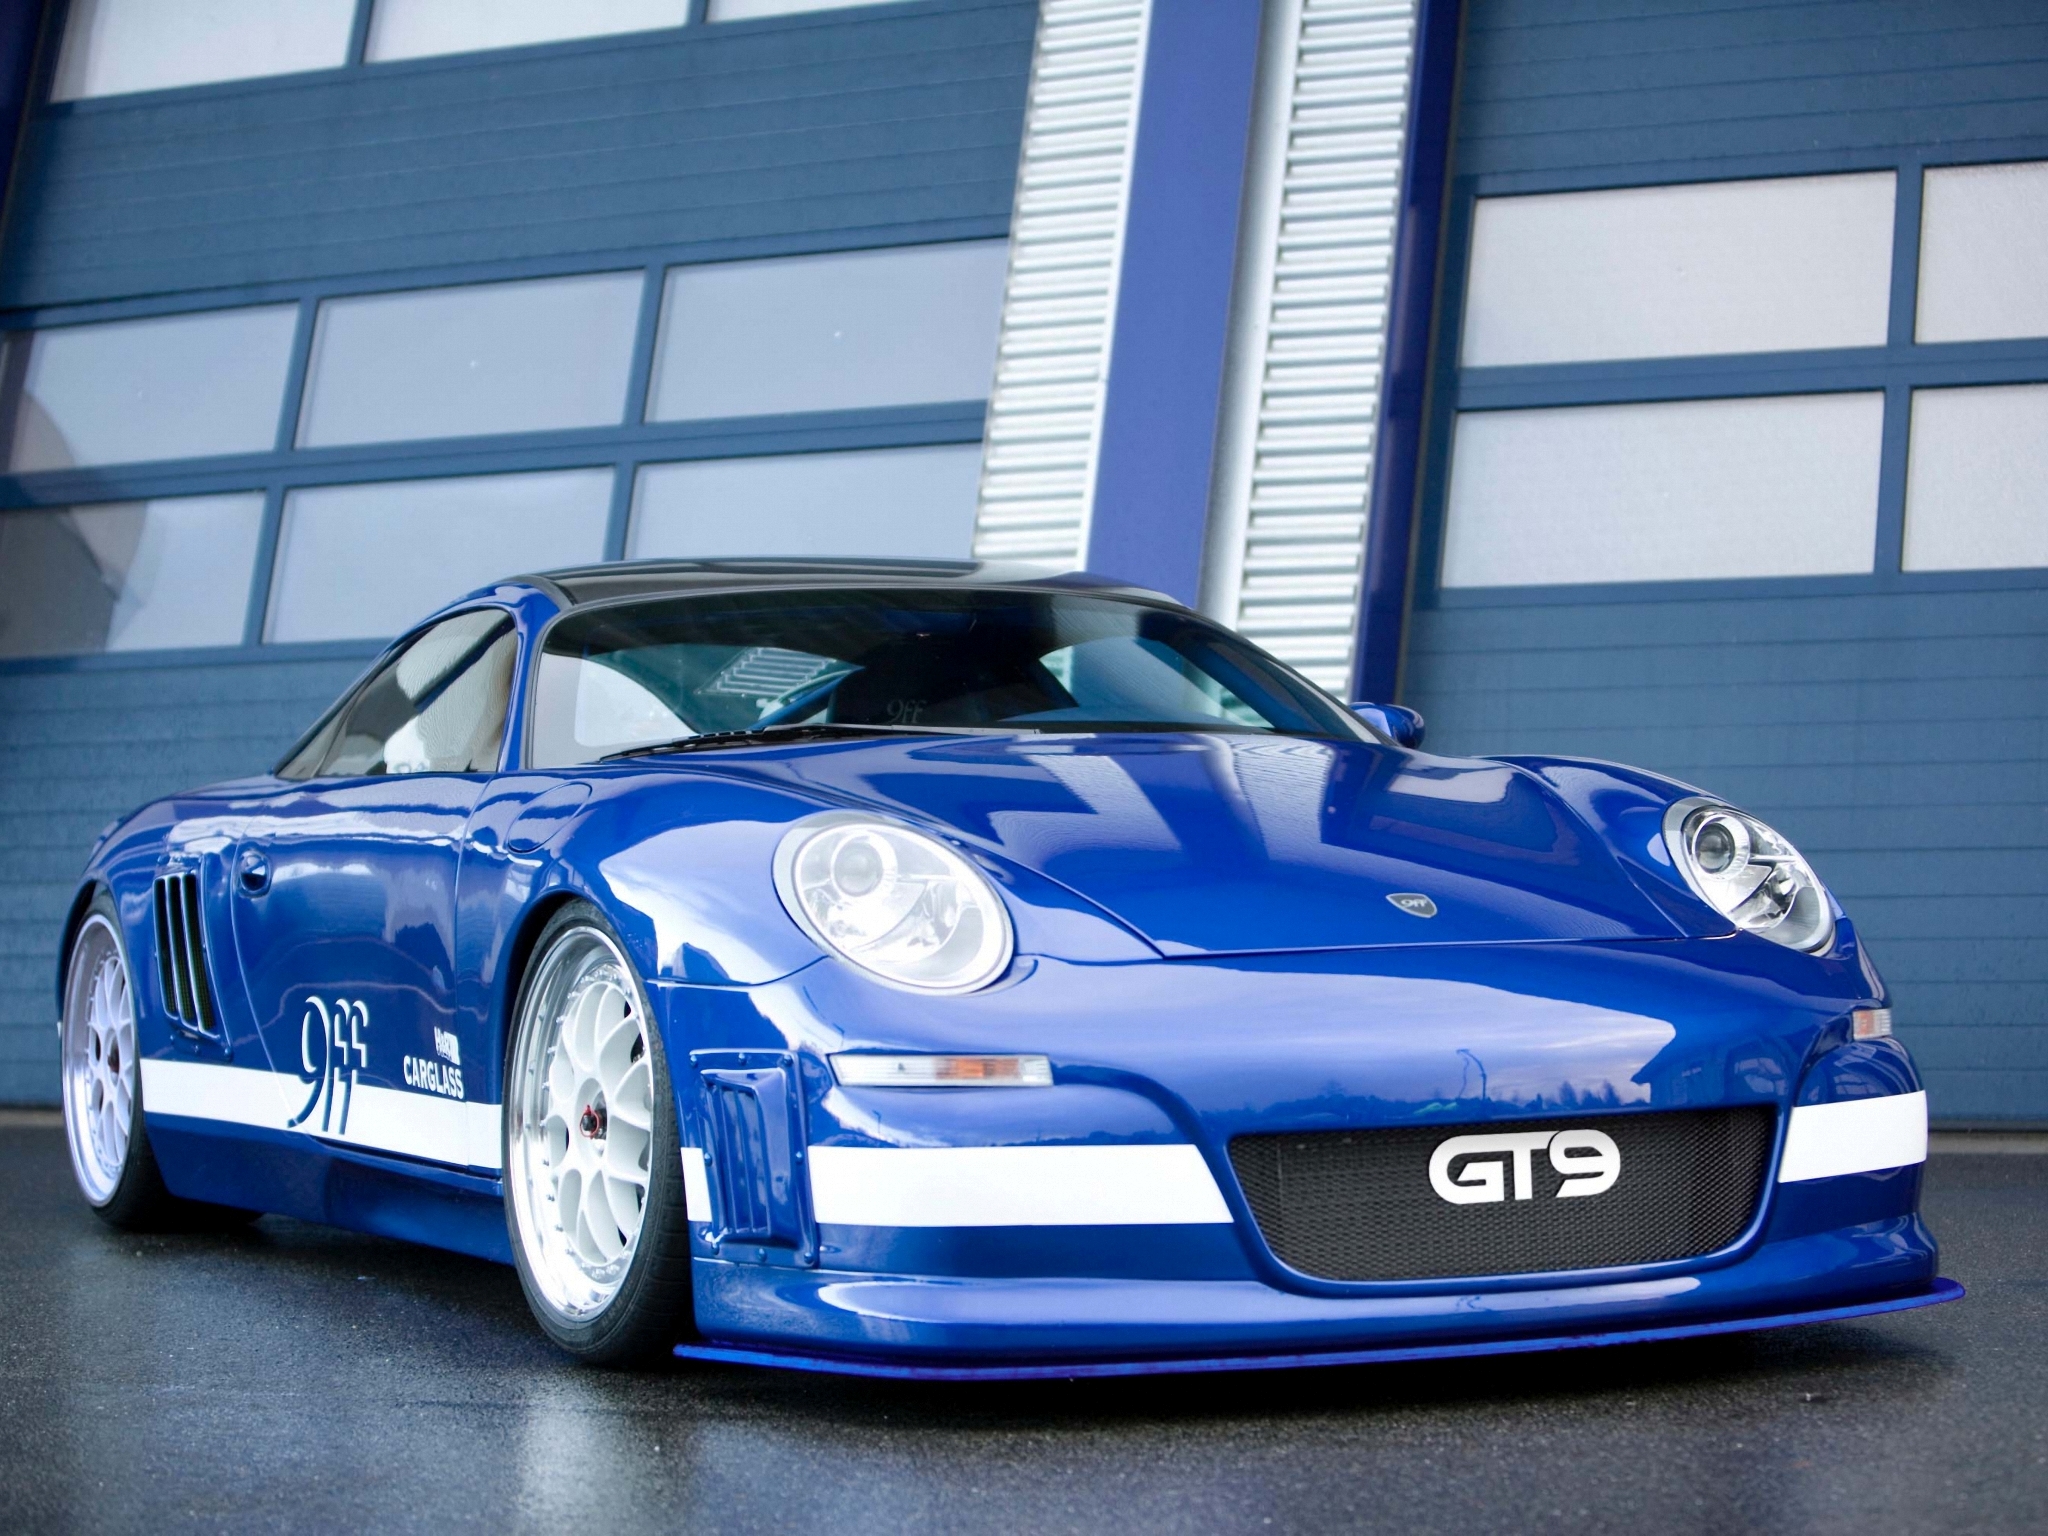 2009, Porsche, 9ff gt9, 911, 997, Turbo, Supercar Wallpaper